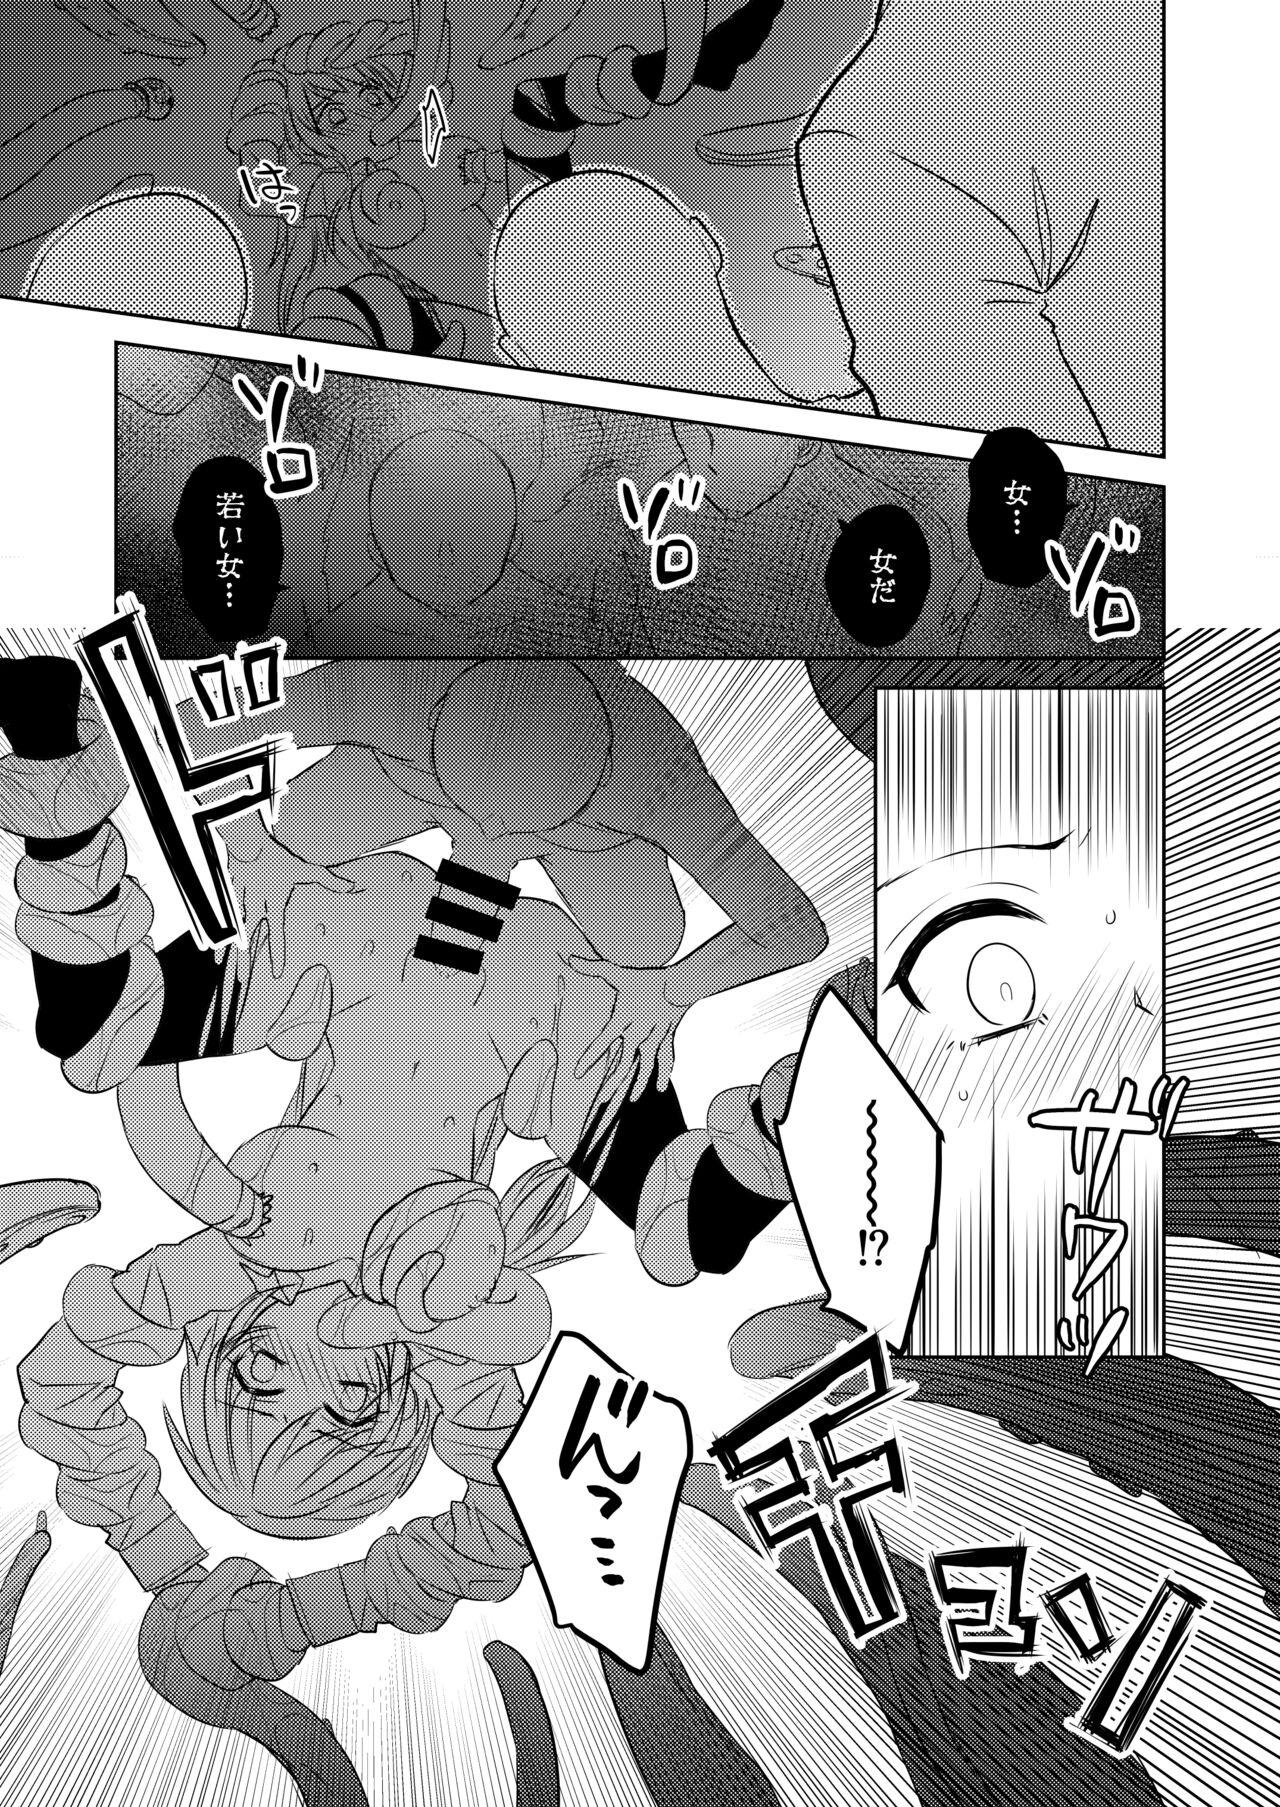 Ladyboy 終電で触手等に輪姦されるOL - Original Rica - Page 5